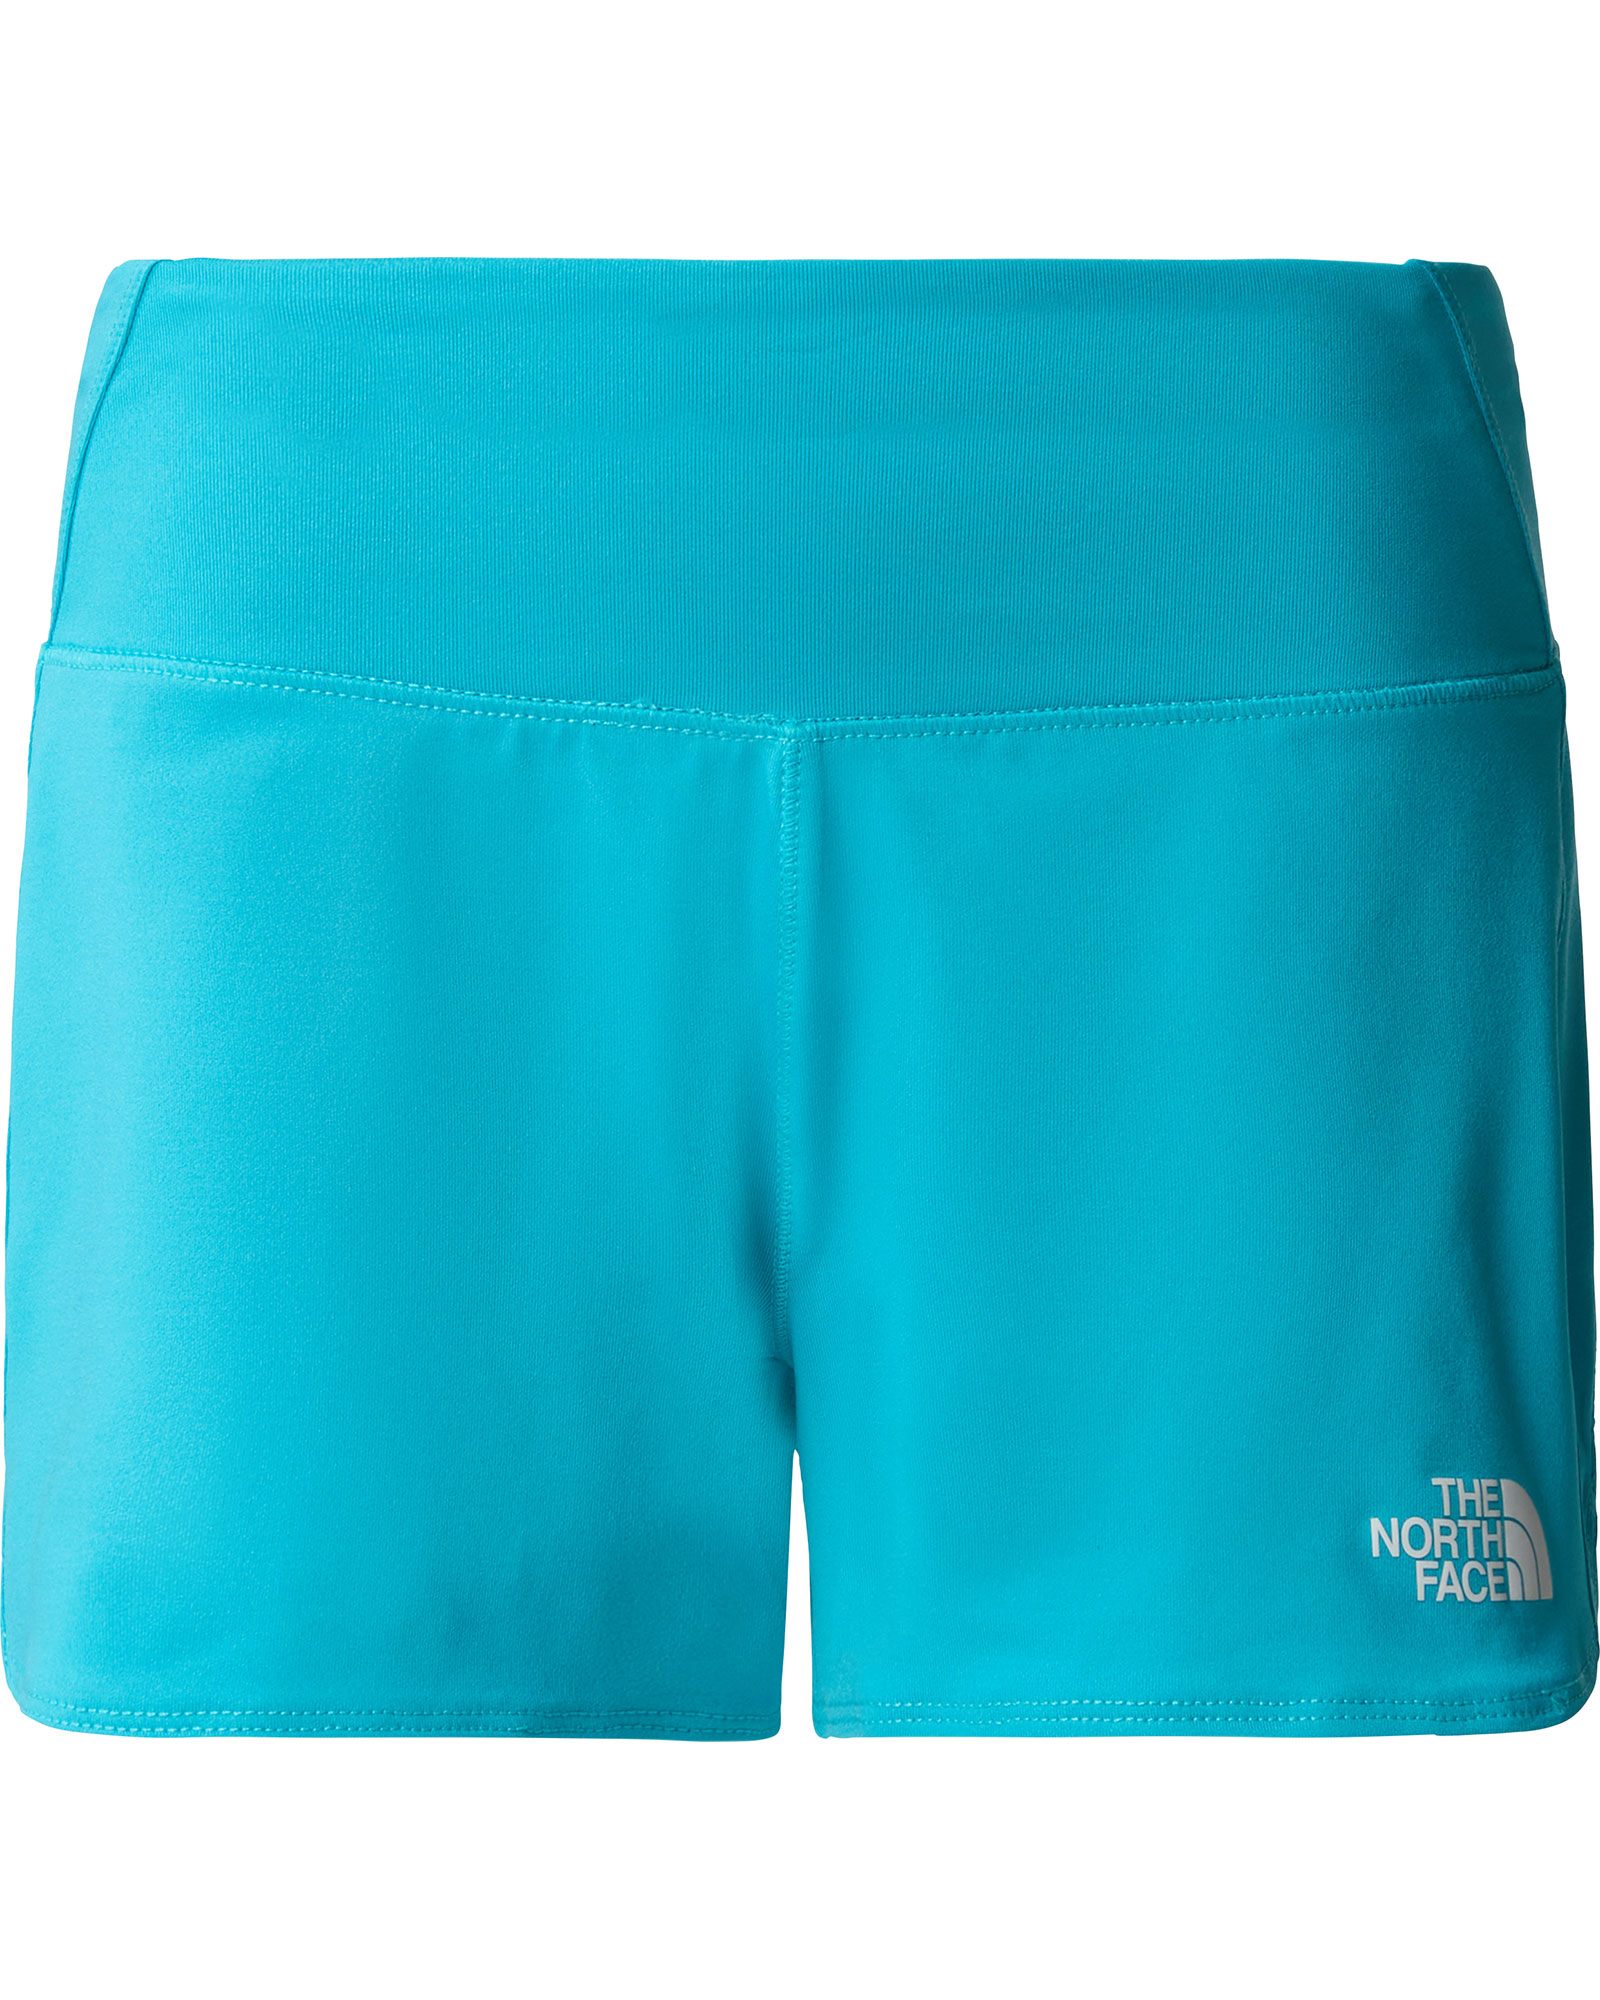 The North Face Girl’s Amphibious Knit Shorts - Scuba Blue S